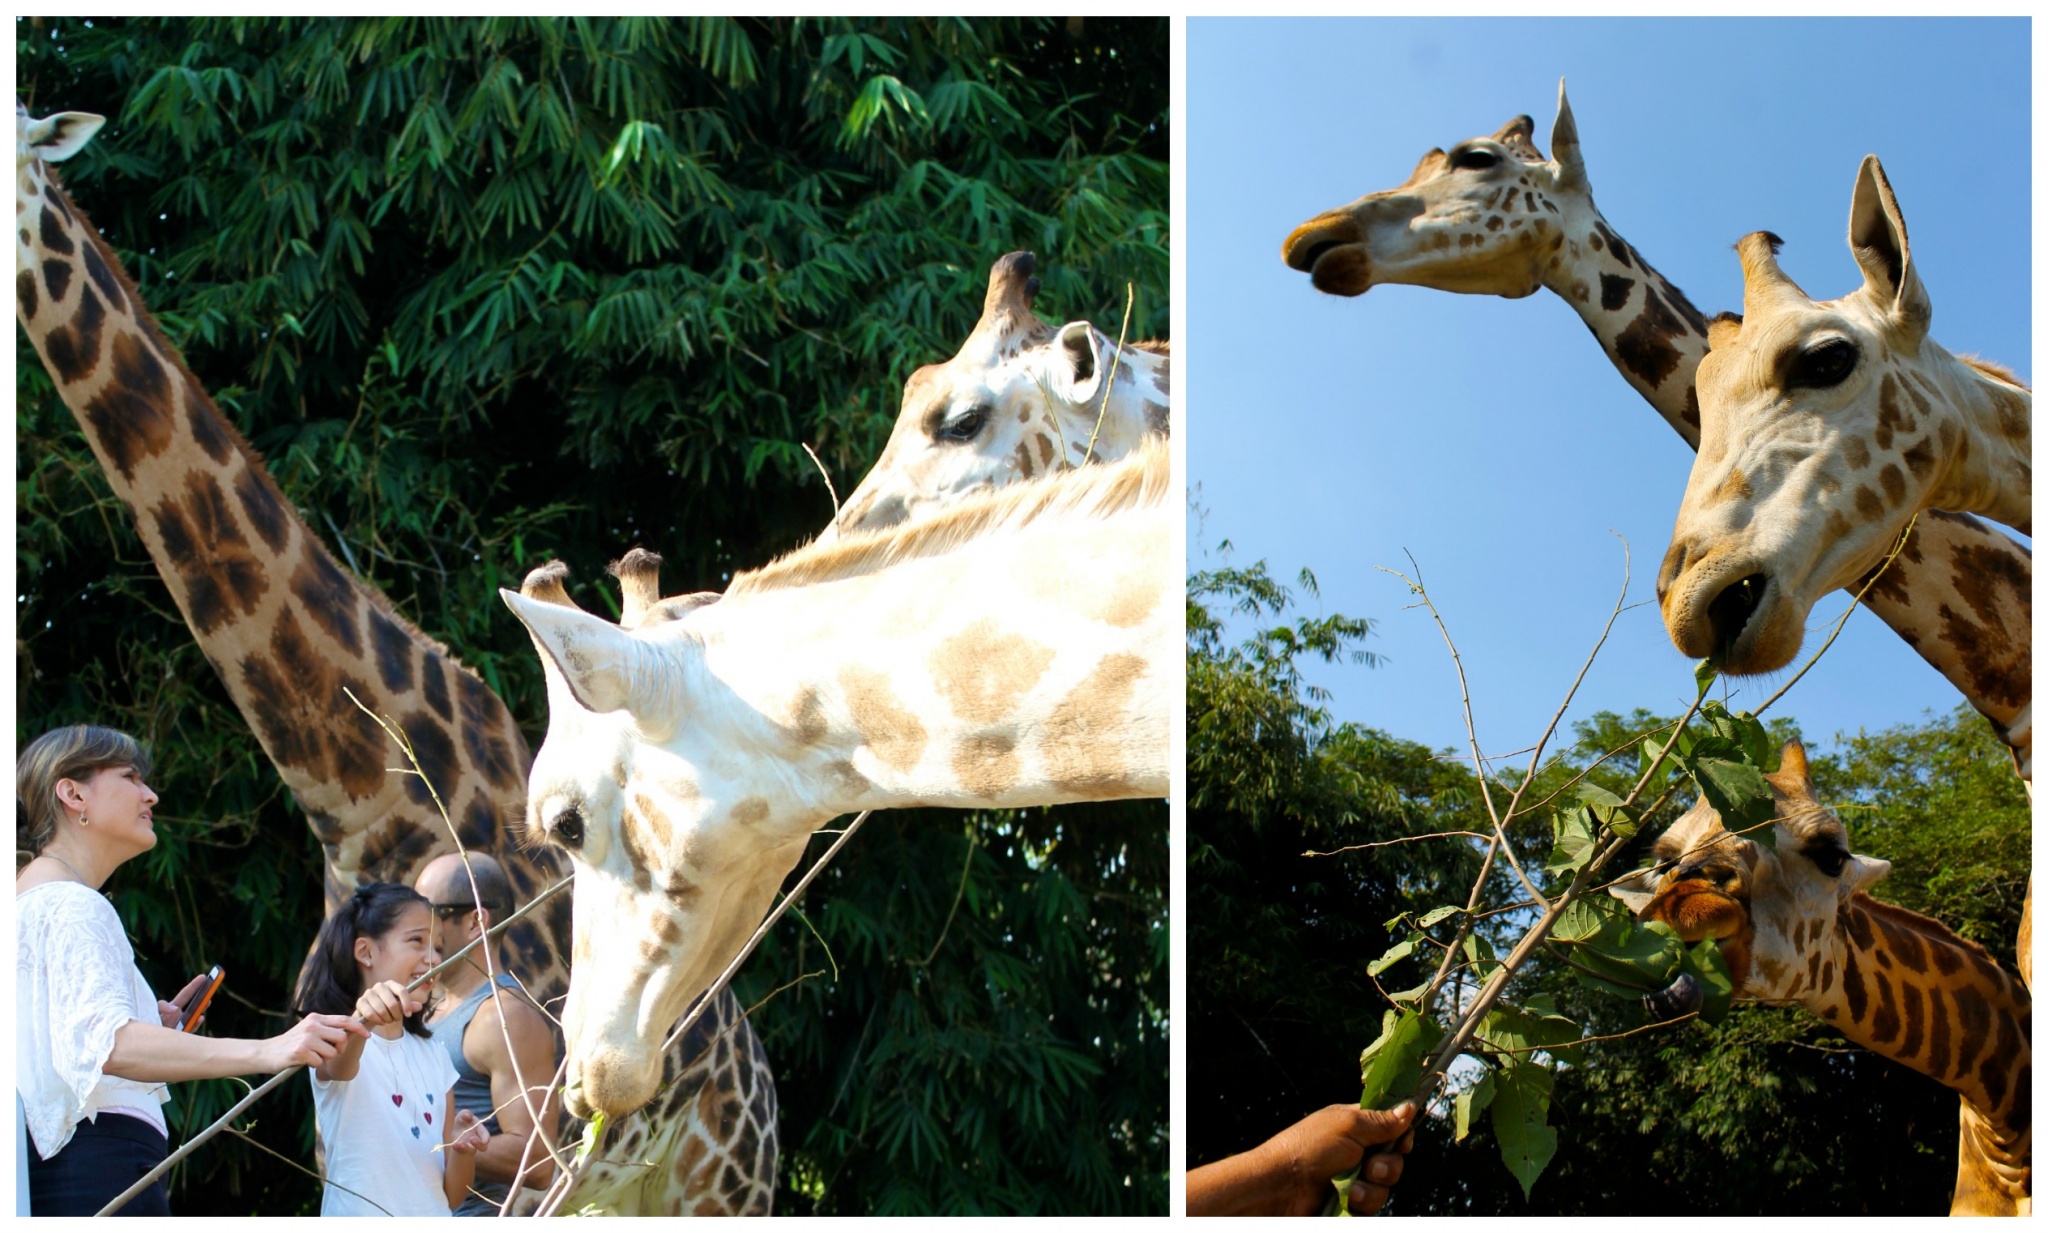 feeding giraffes at Auto Safari Chapin